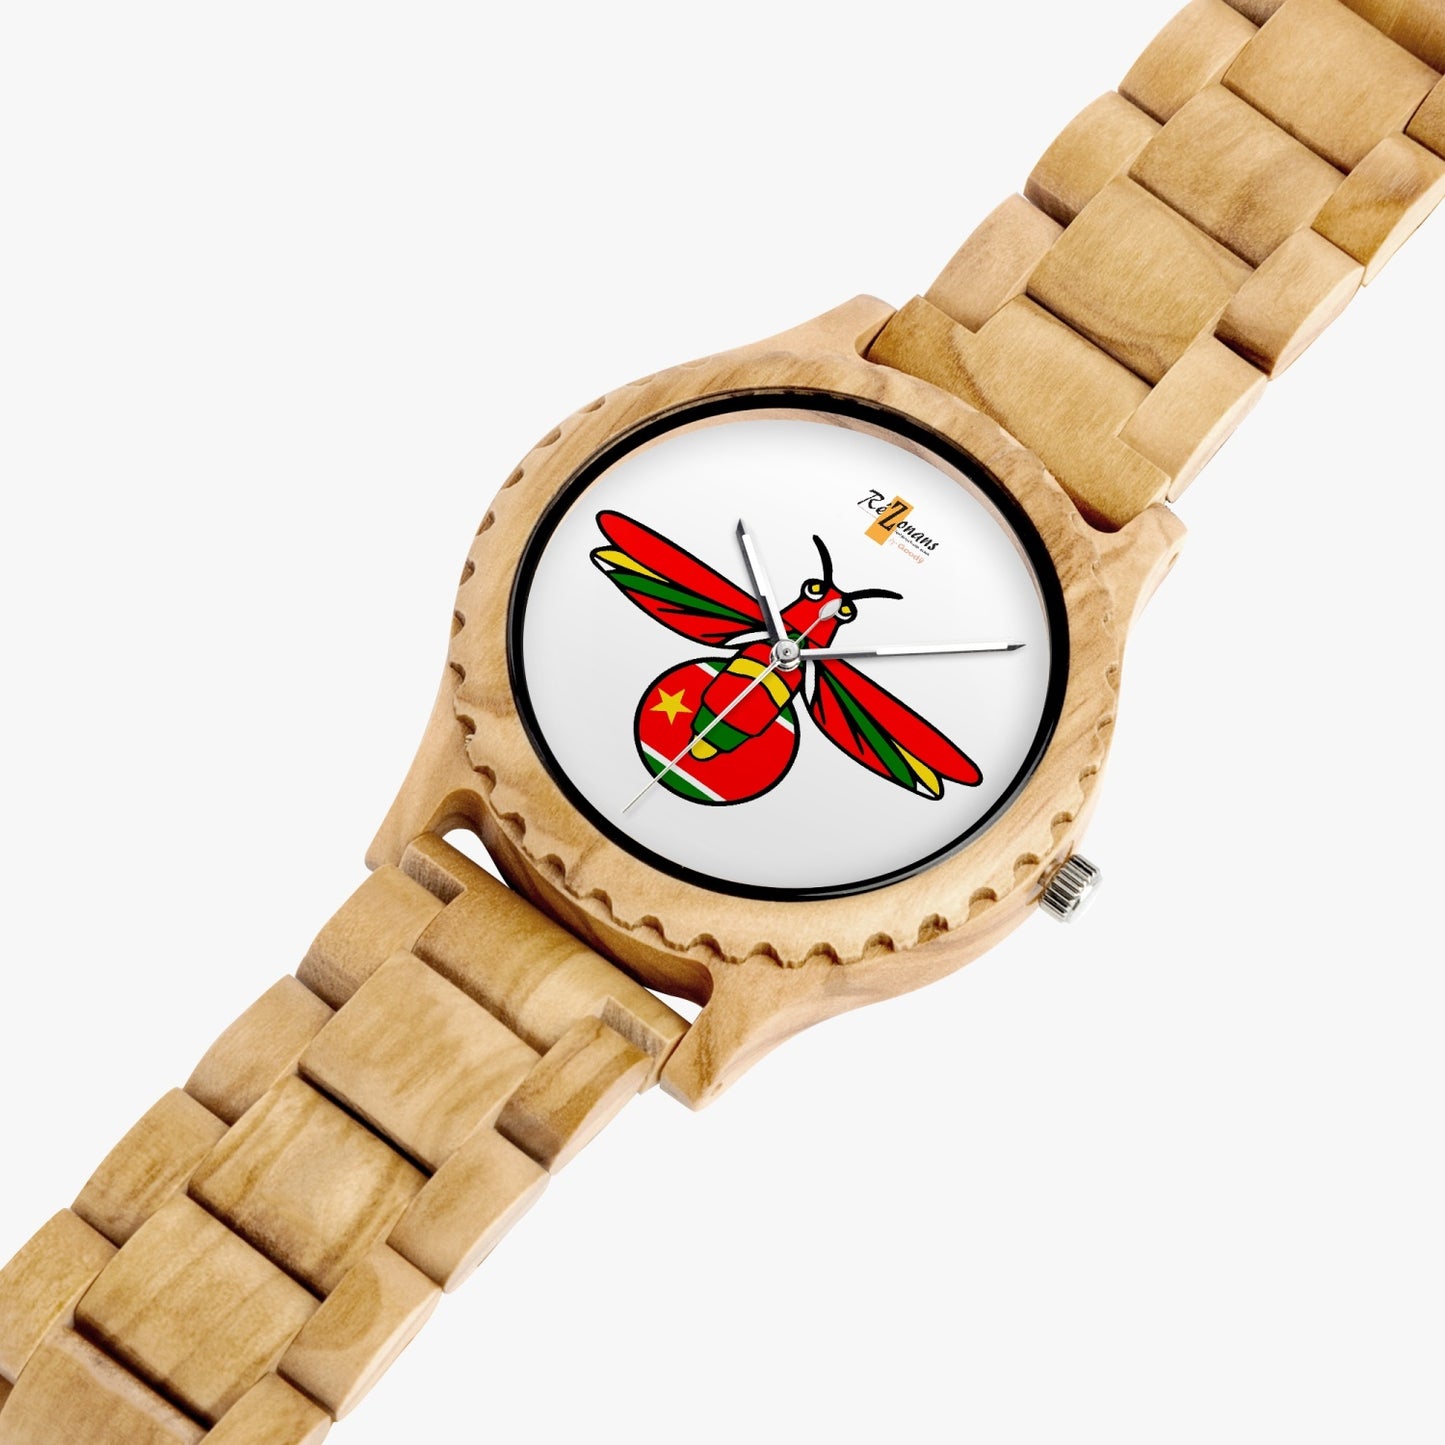 Natural wood watch "Klendenden"